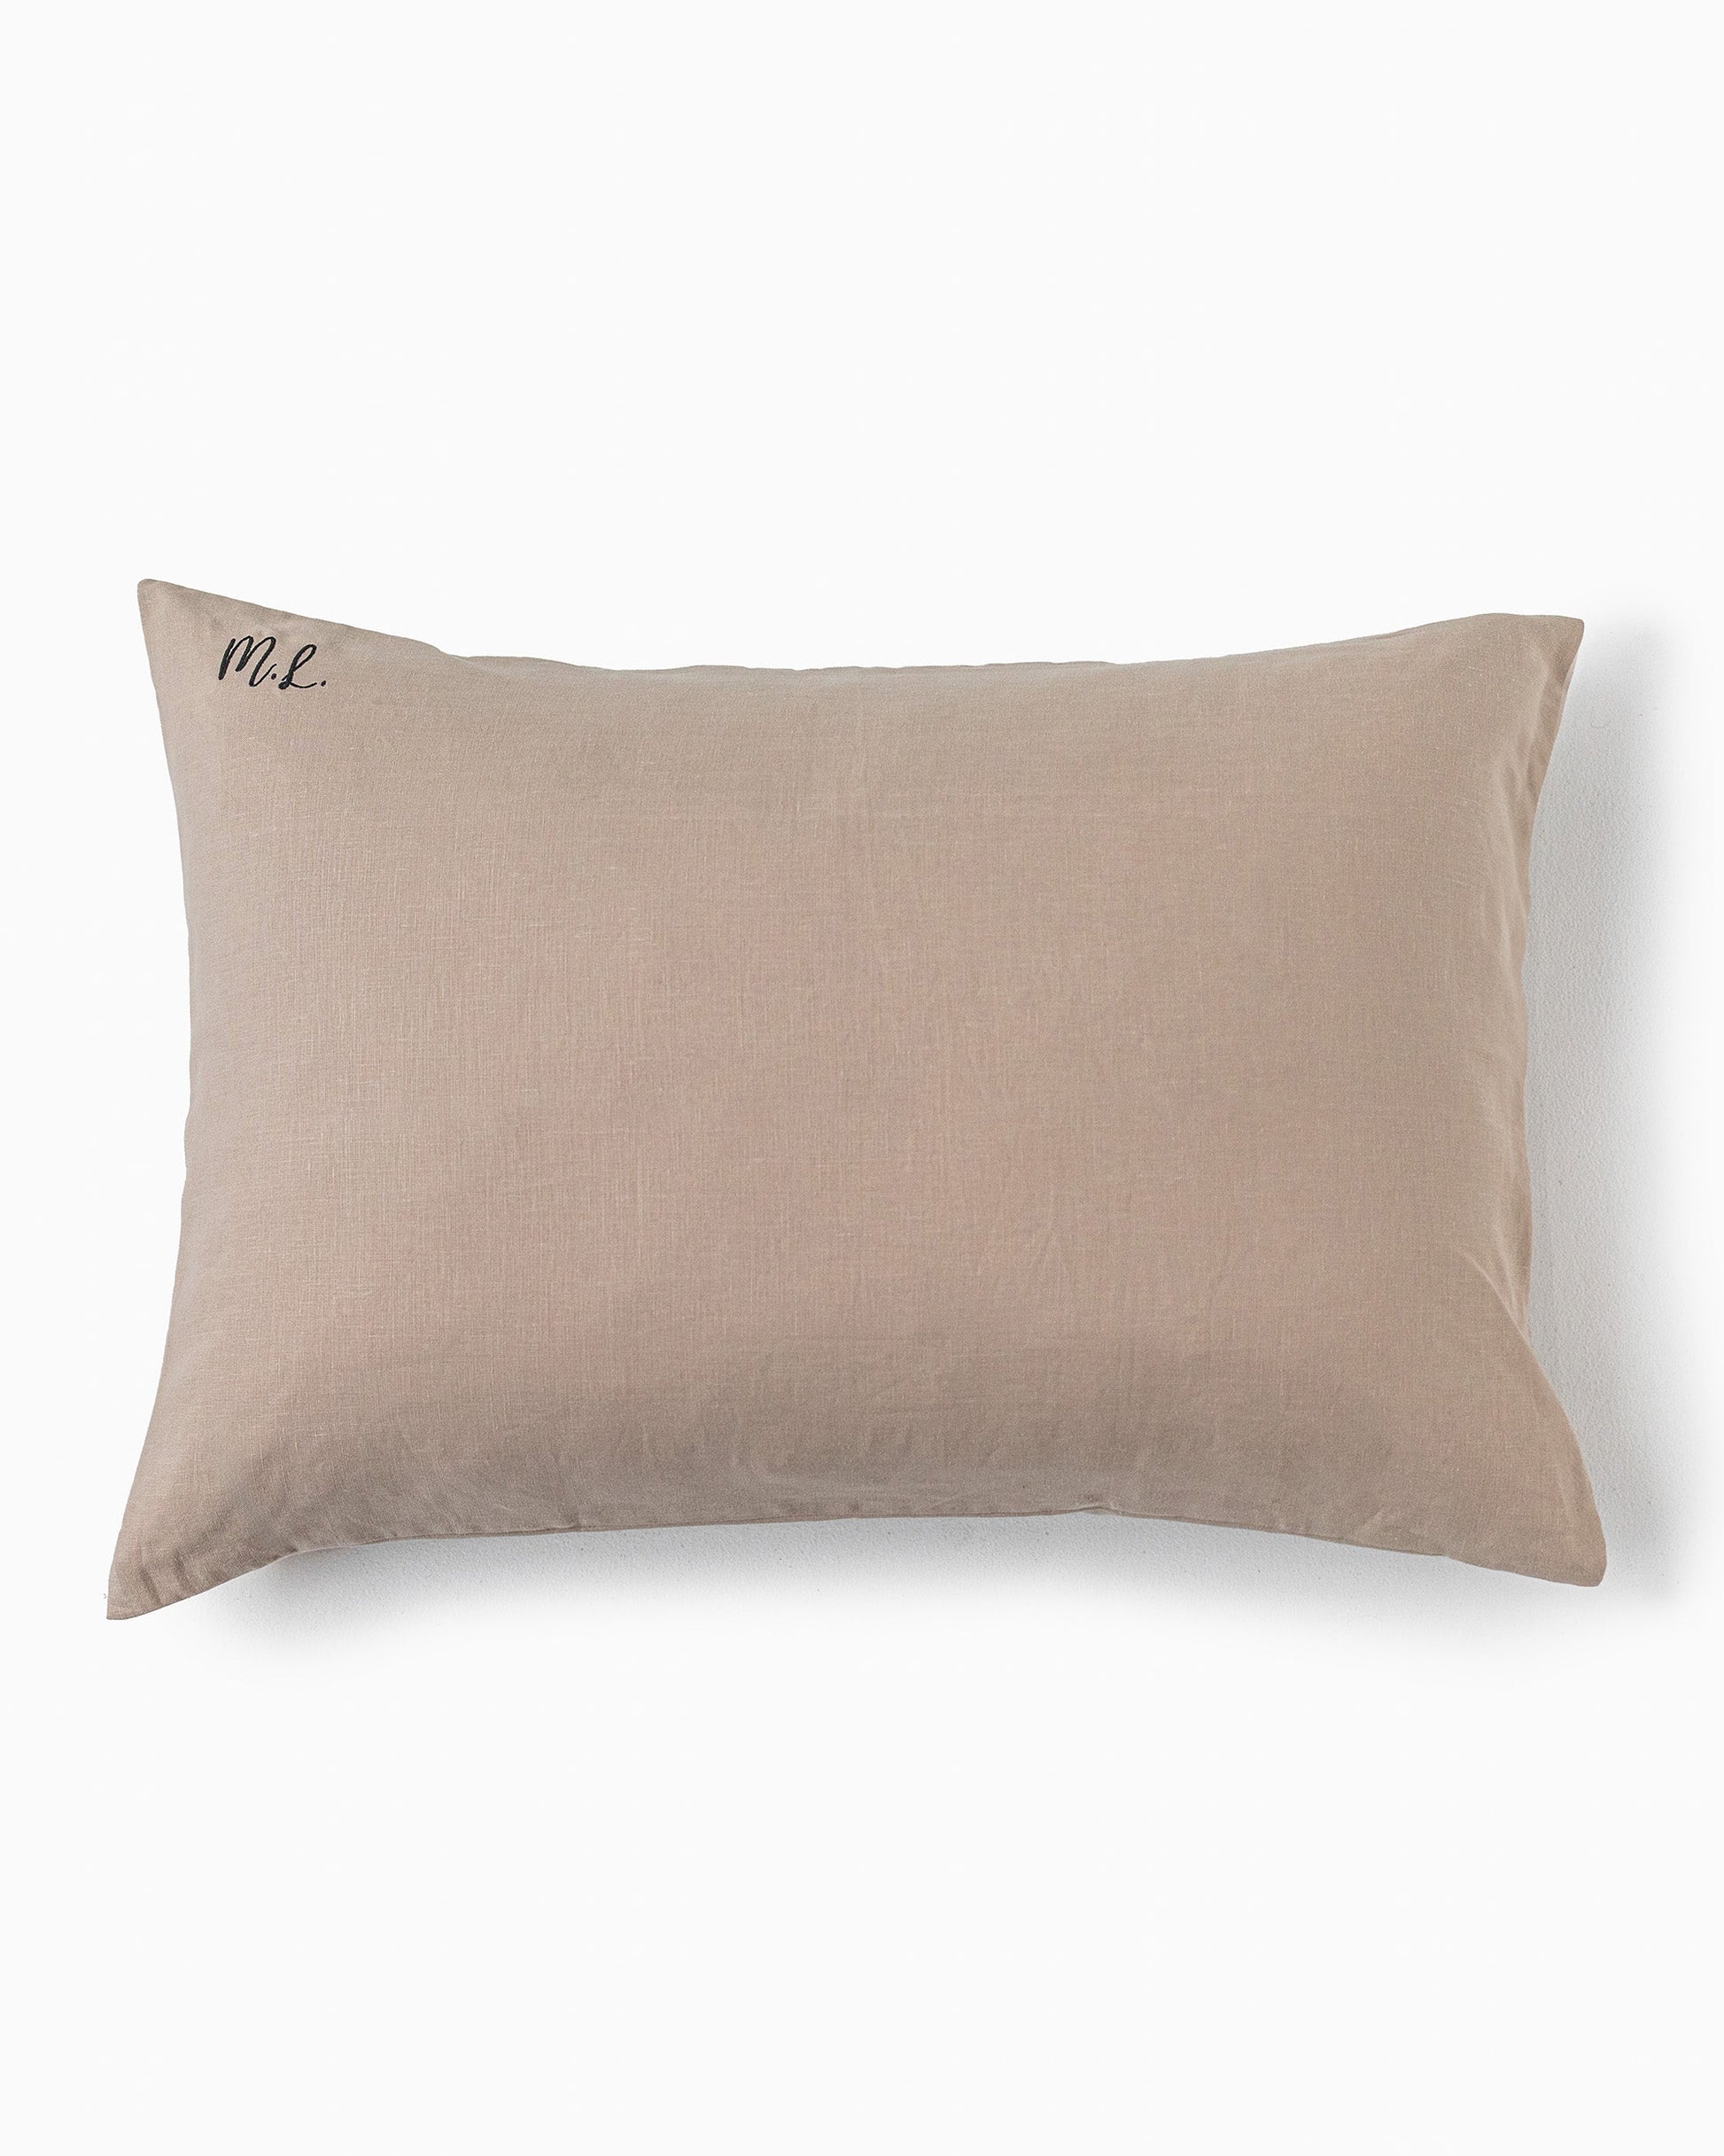 Cinnamon linen pillowcase - MagicLinen